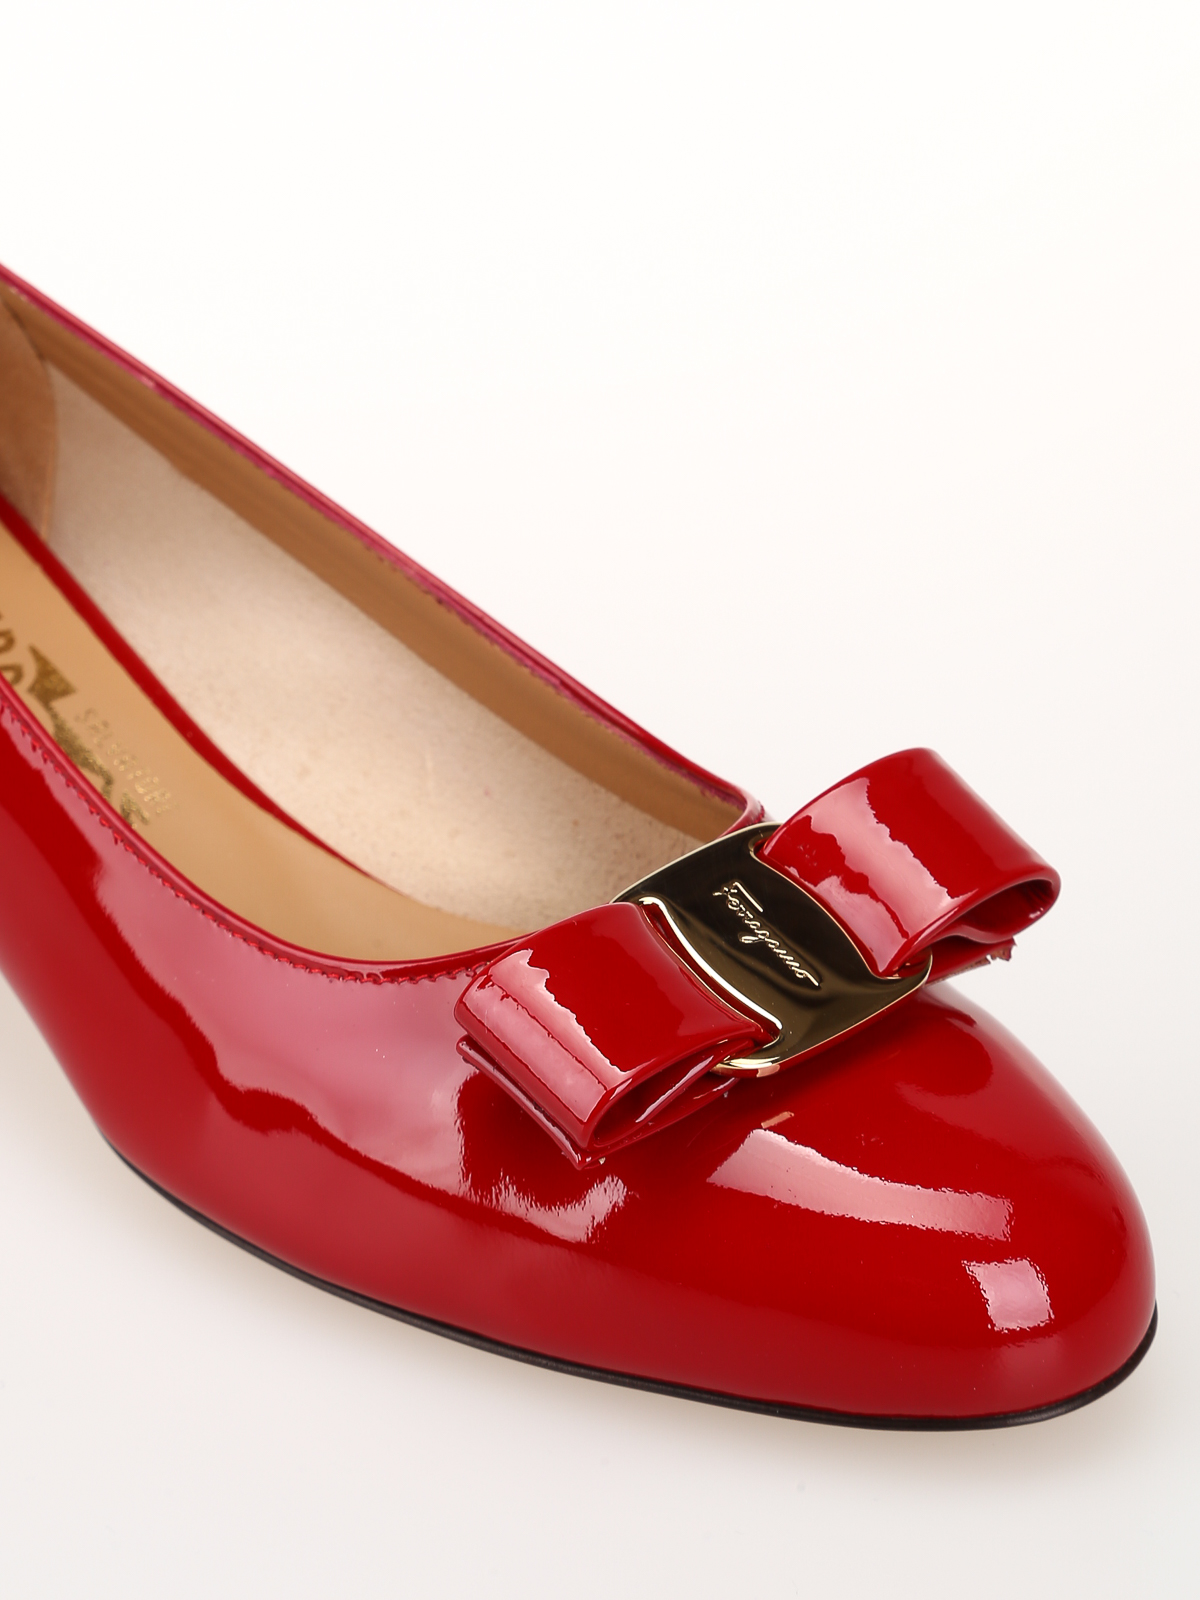 Court shoes Salvatore Ferragamo Vara red patent leather pumps 591964